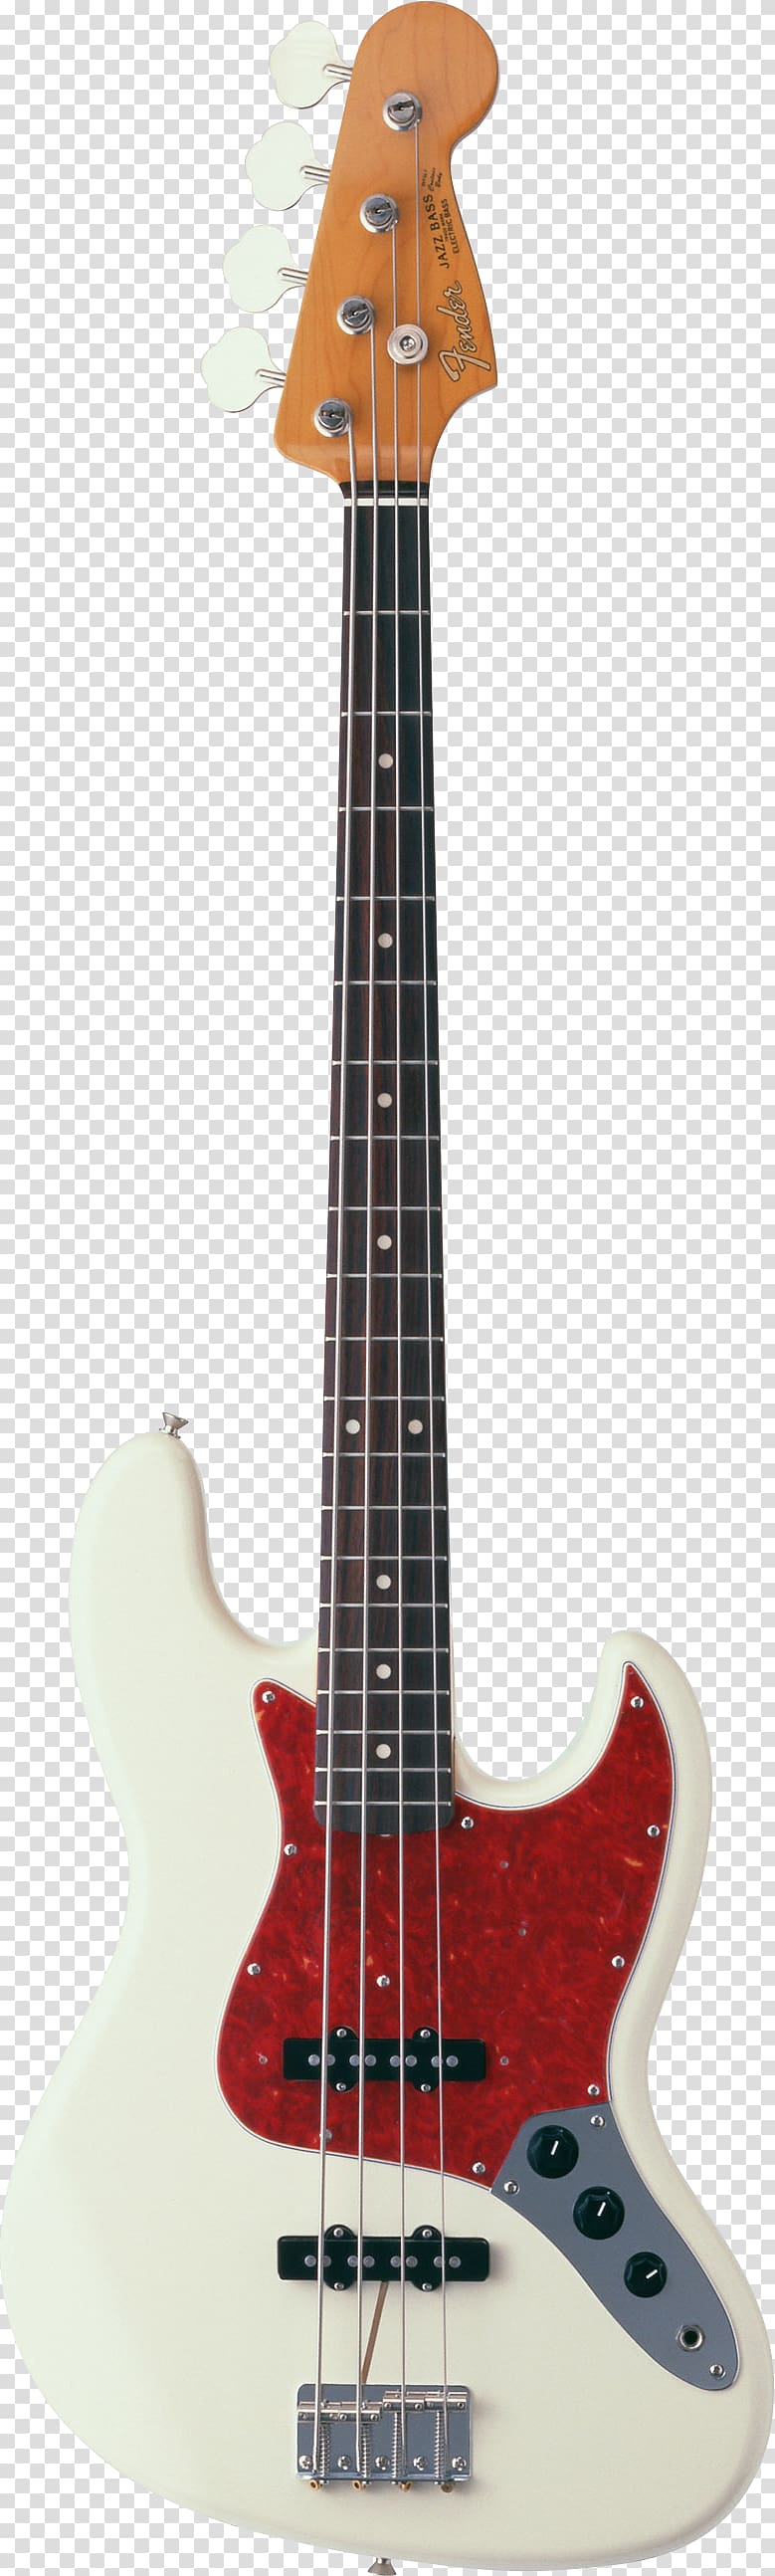 Fender Precision Bass Fender Jaguar Fender Stratocaster Bass guitar Fender Jazz Bass, Electric guitar transparent background PNG clipart